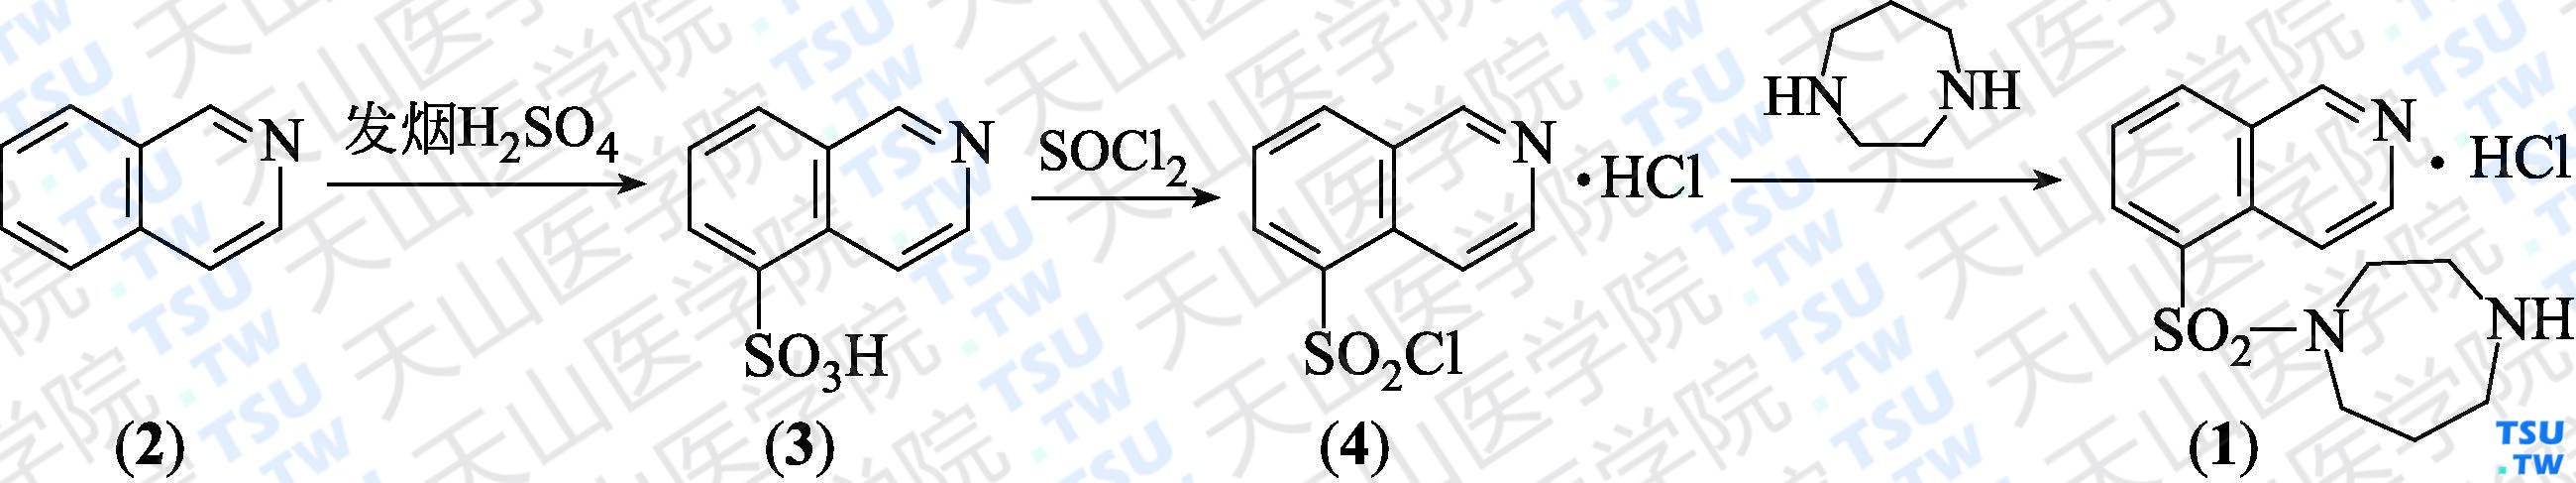 盐酸法舒地尔（分子式：C<sub>14</sub>H<sub>17</sub>N<sub>3</sub>O<sub>2</sub>S·HCl）的合成方法路线及其结构式